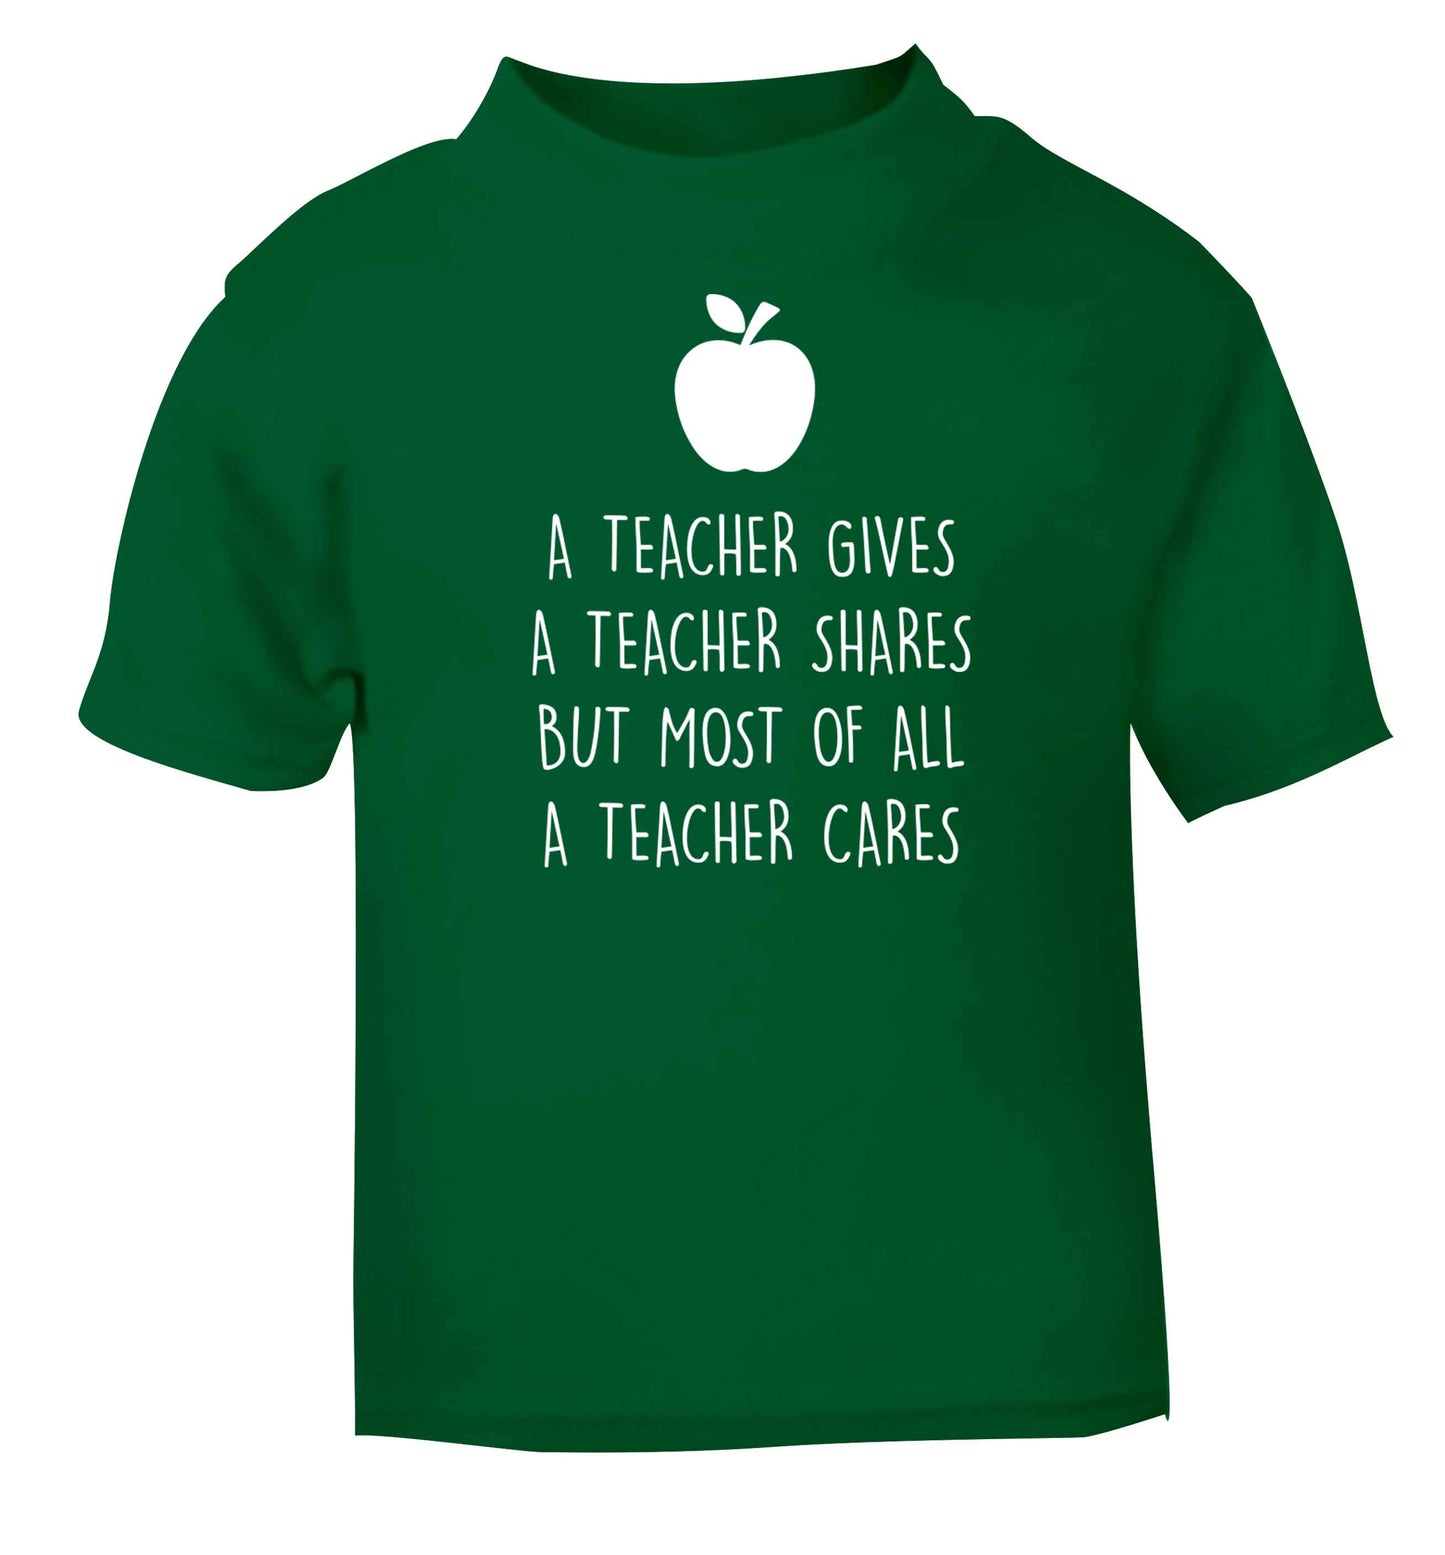 A teacher gives a teacher shares but most of all a teacher cares green baby toddler Tshirt 2 Years